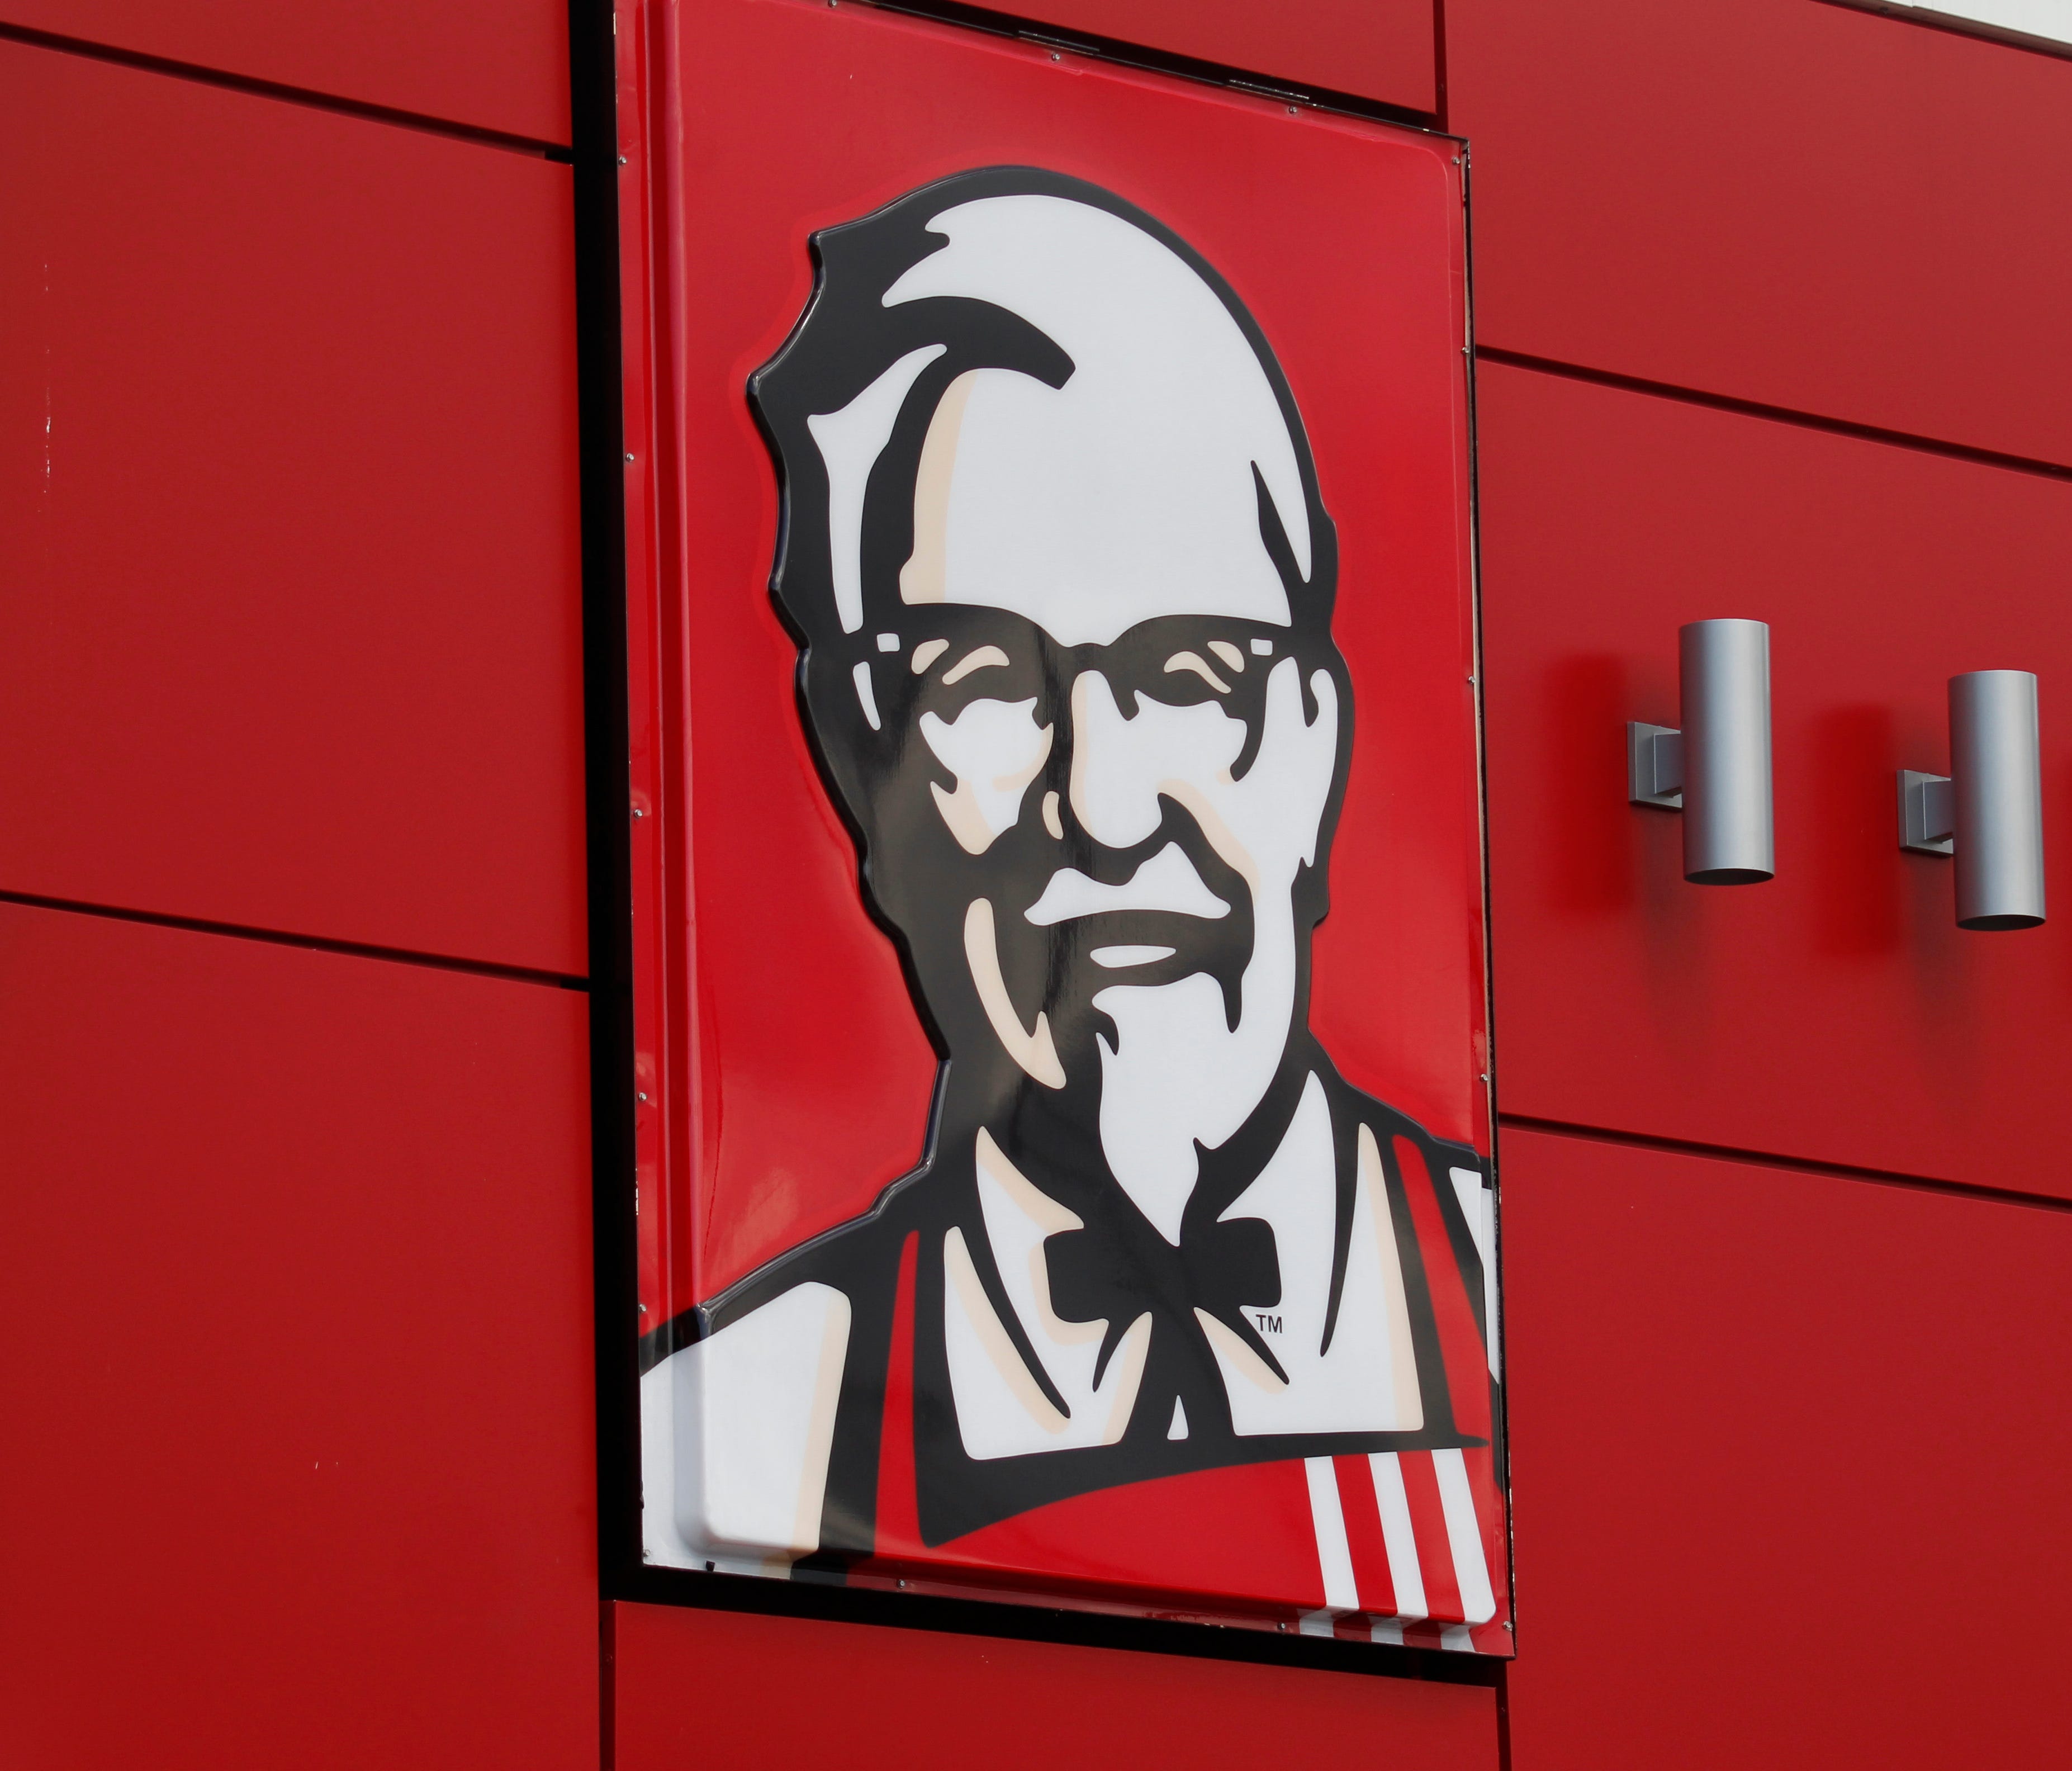 A KFC sign in Doral, Fla.